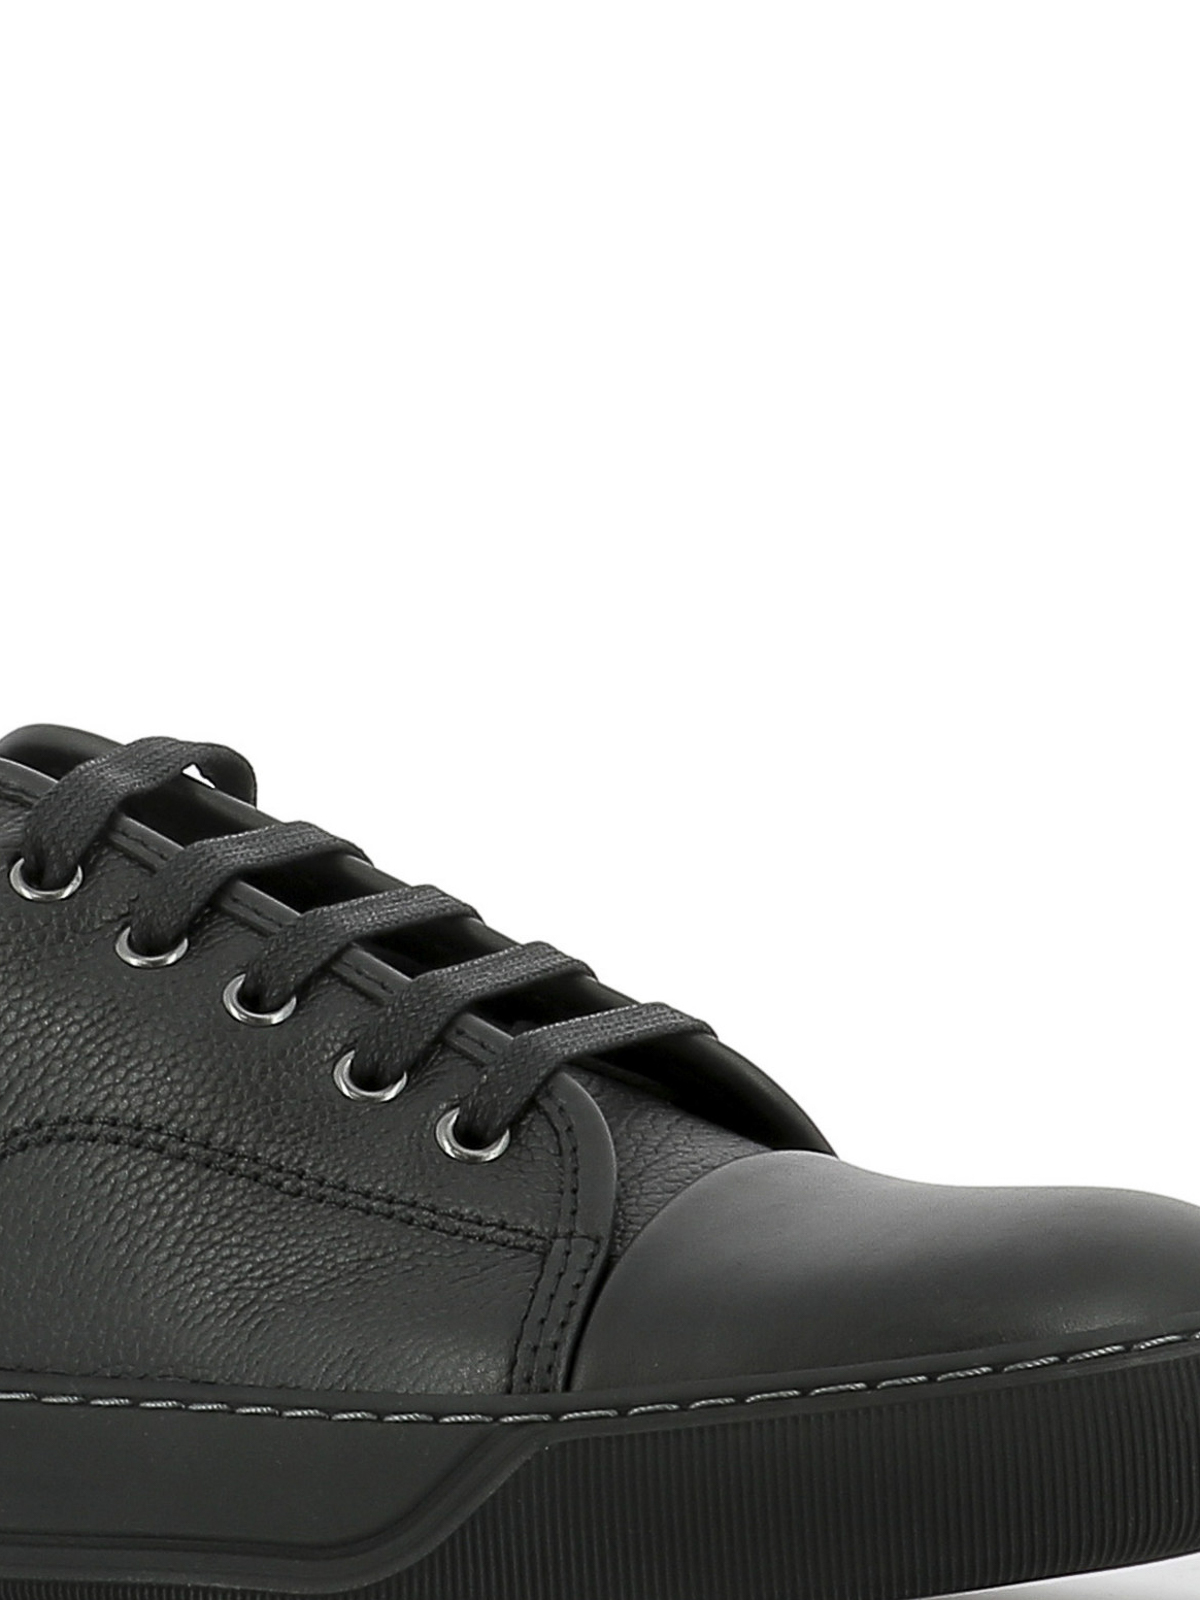 Lanvin - Toe cap leather sneakers 